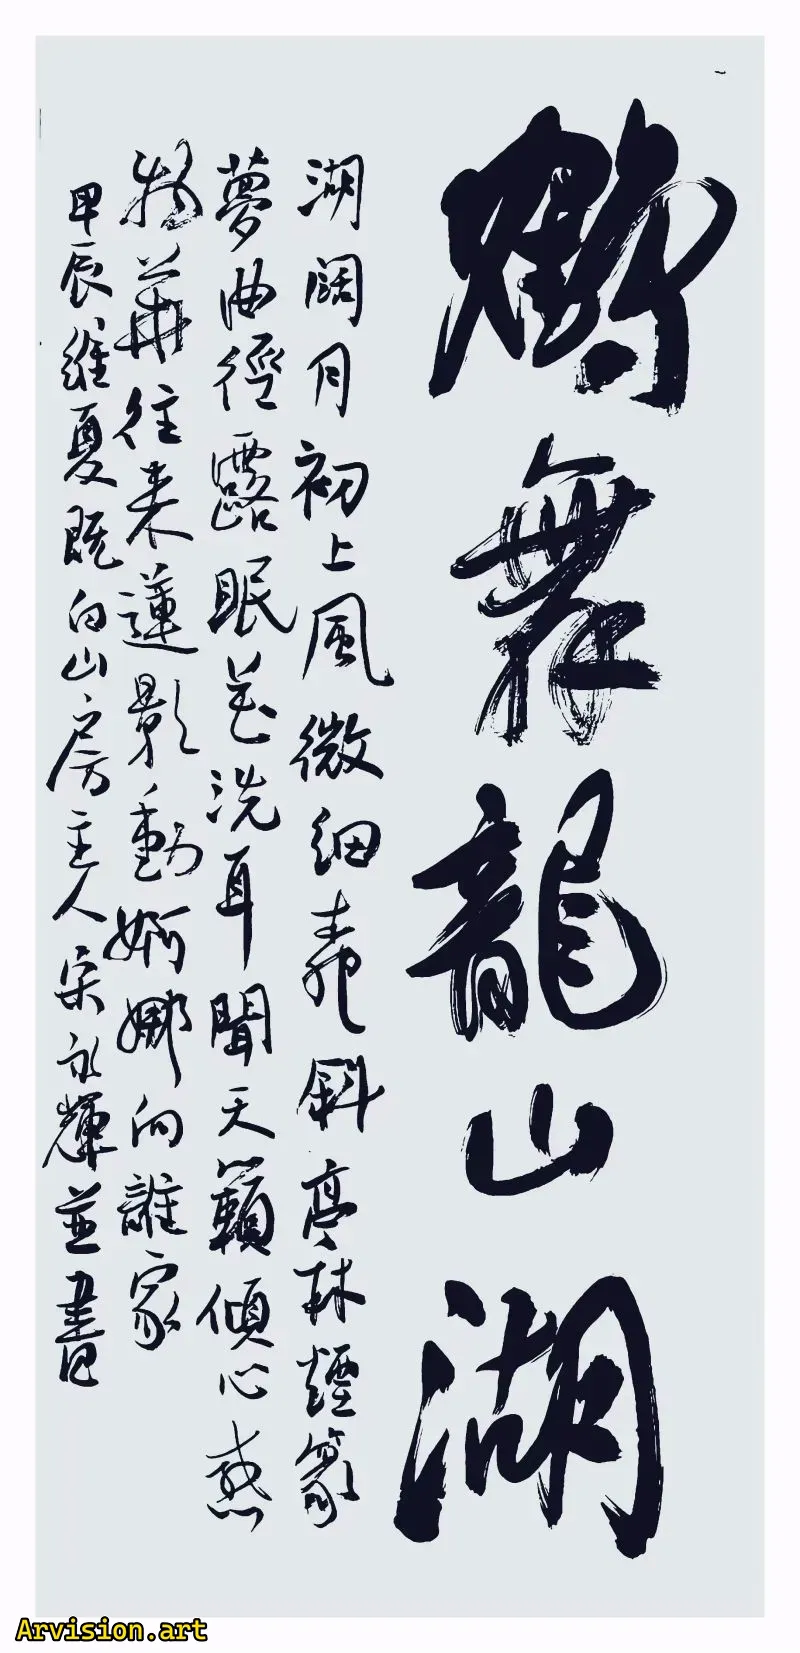 Obras de caligrafía de Song yonghui, lago hewu Longshan